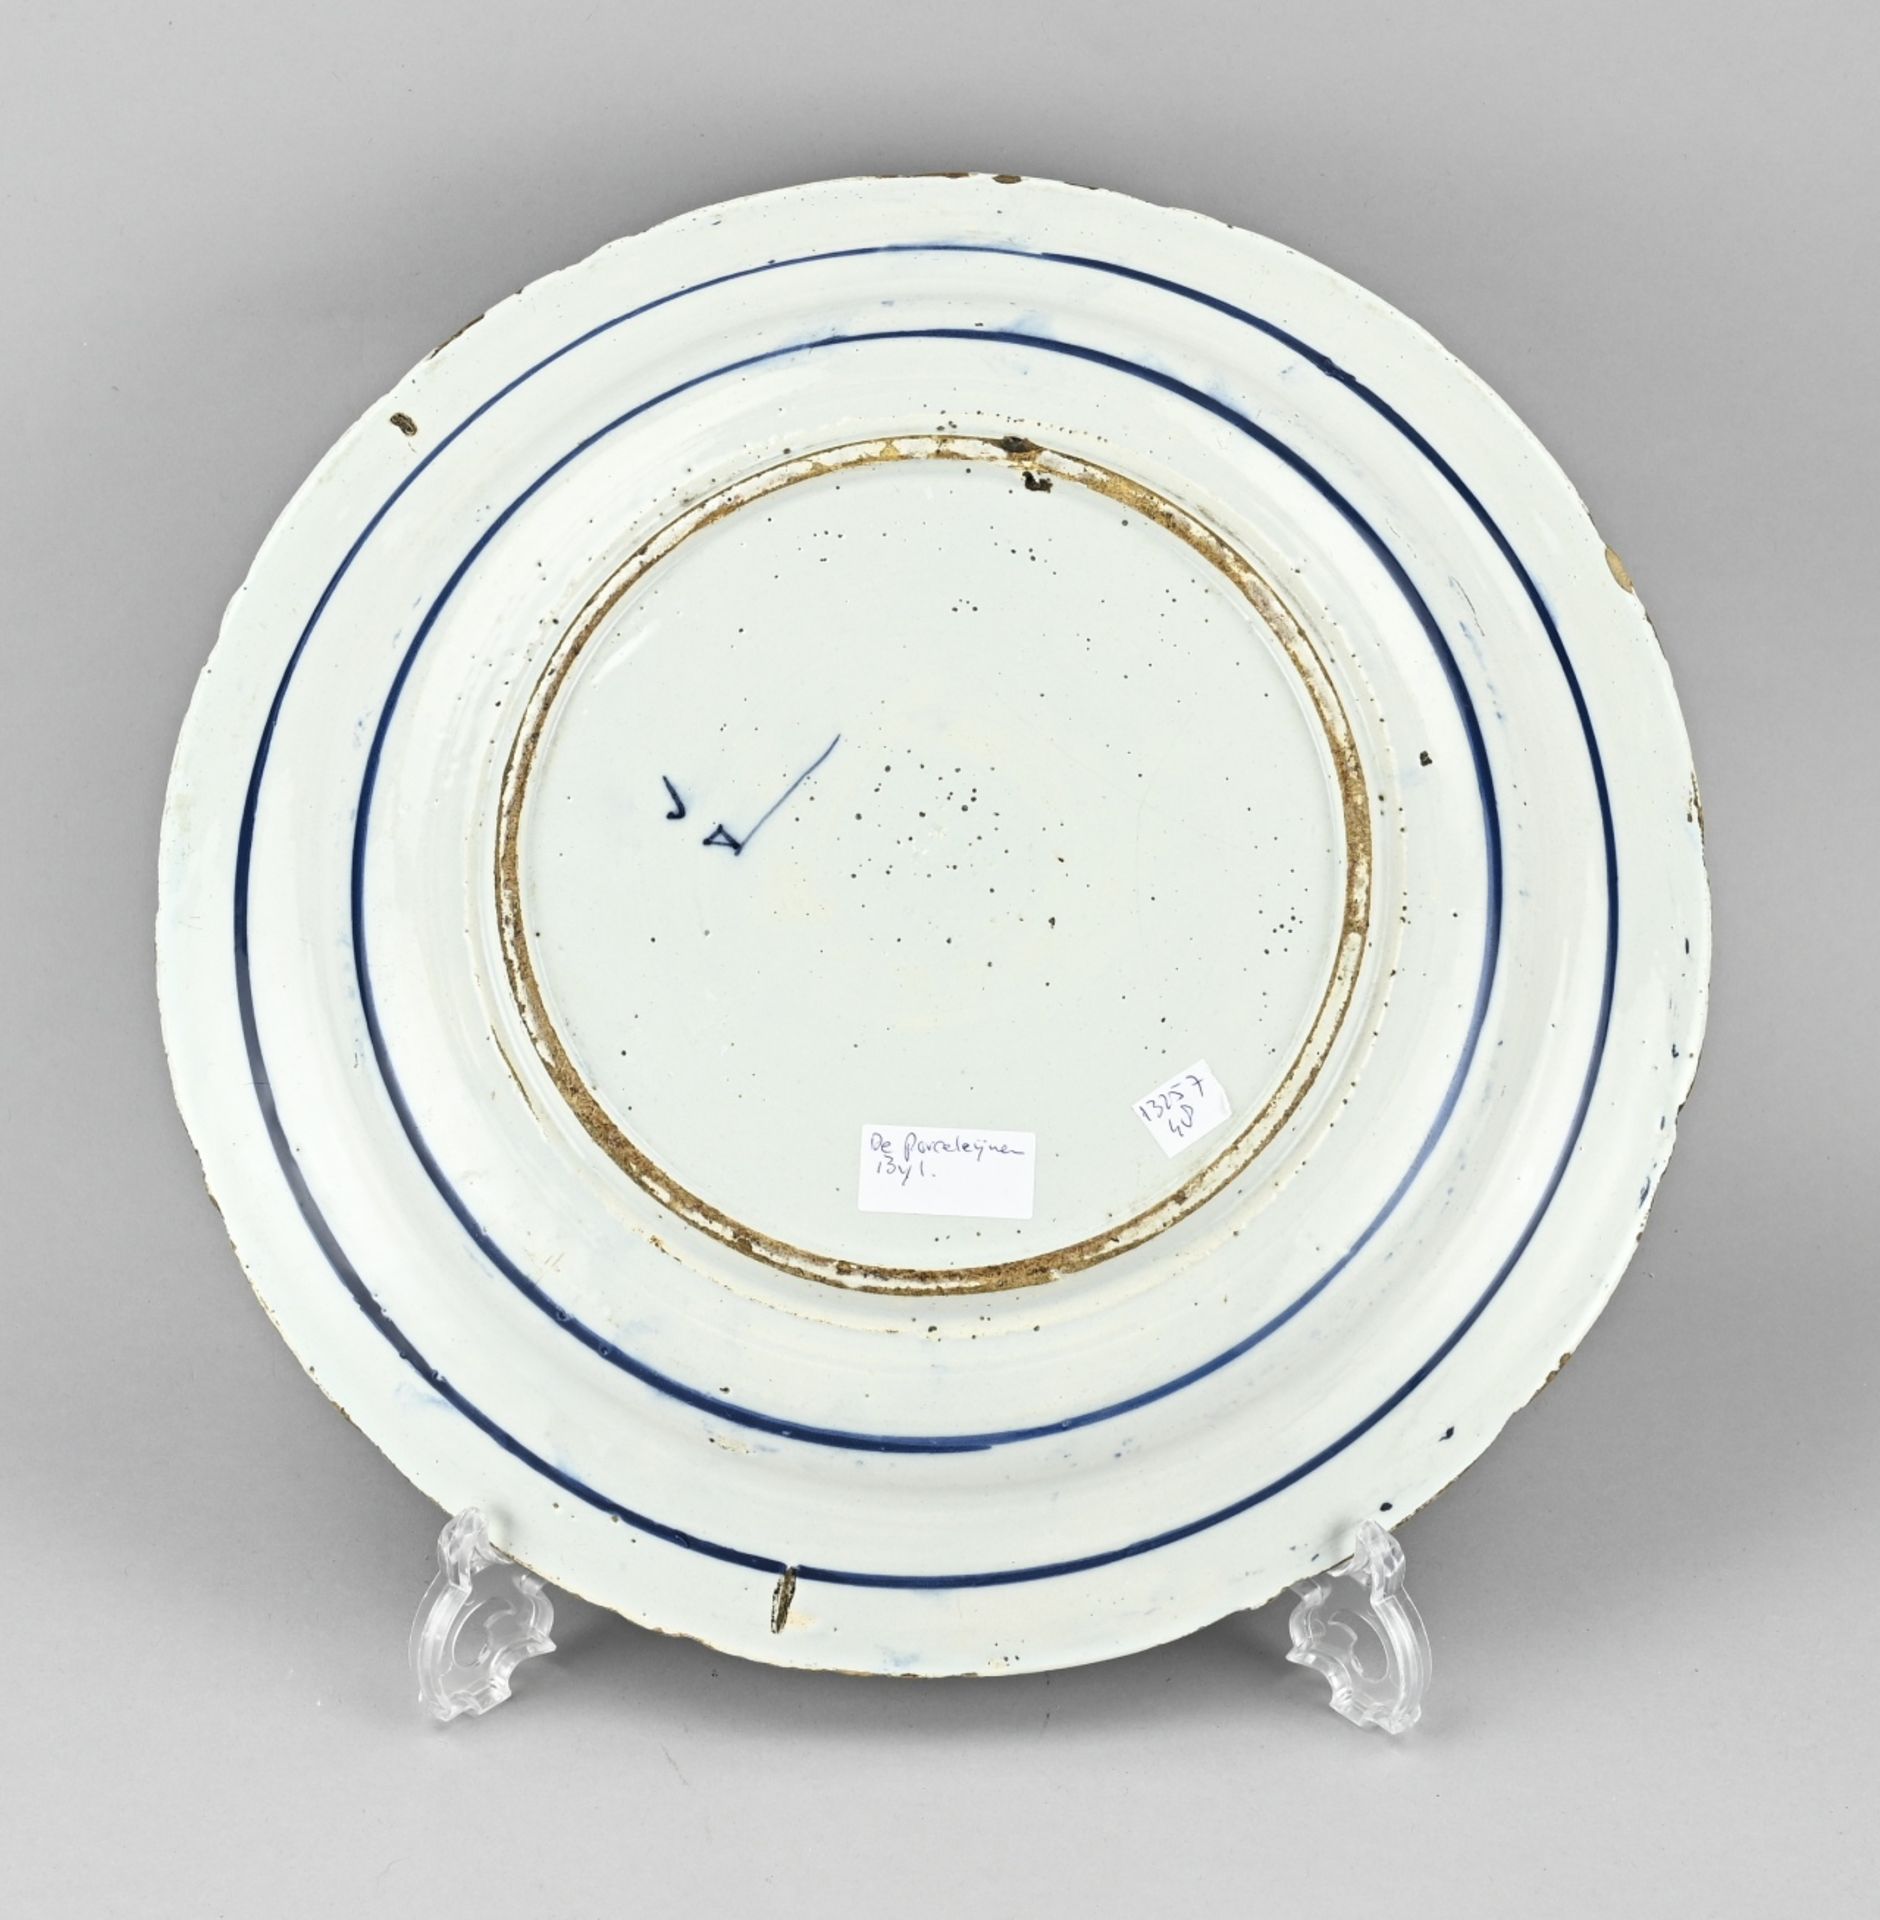 Delft dish (Porceleijne Bijl) Ã˜ 35.5 cm. - Image 2 of 2